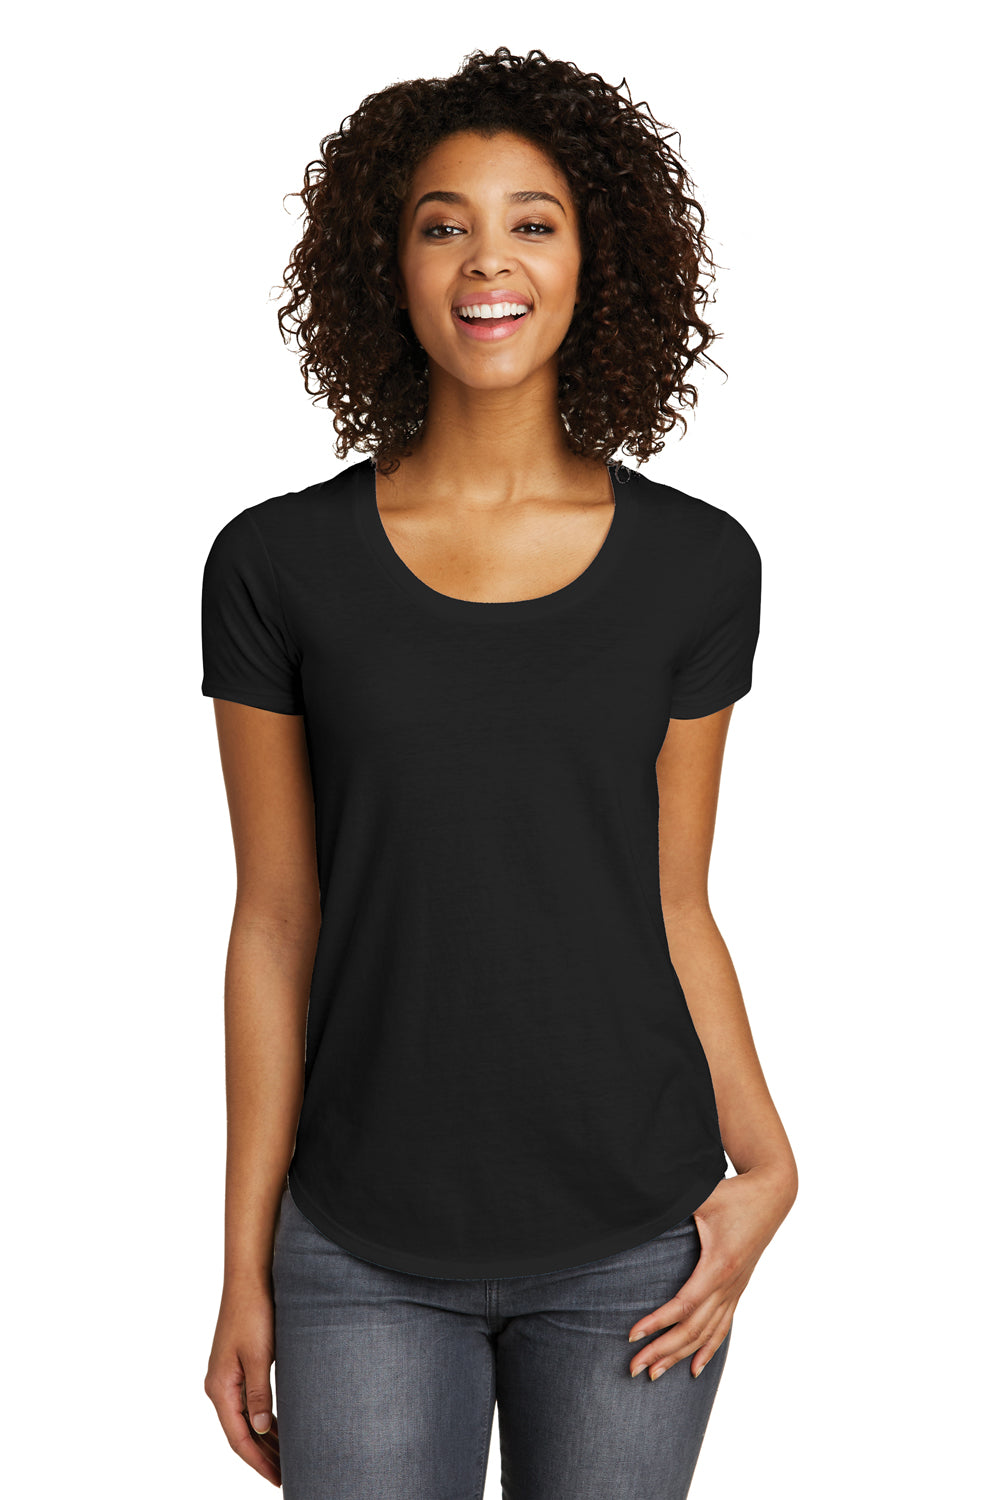 District DT6401 Womens Very Important Short Sleeve Crewneck T-Shirt Black Front